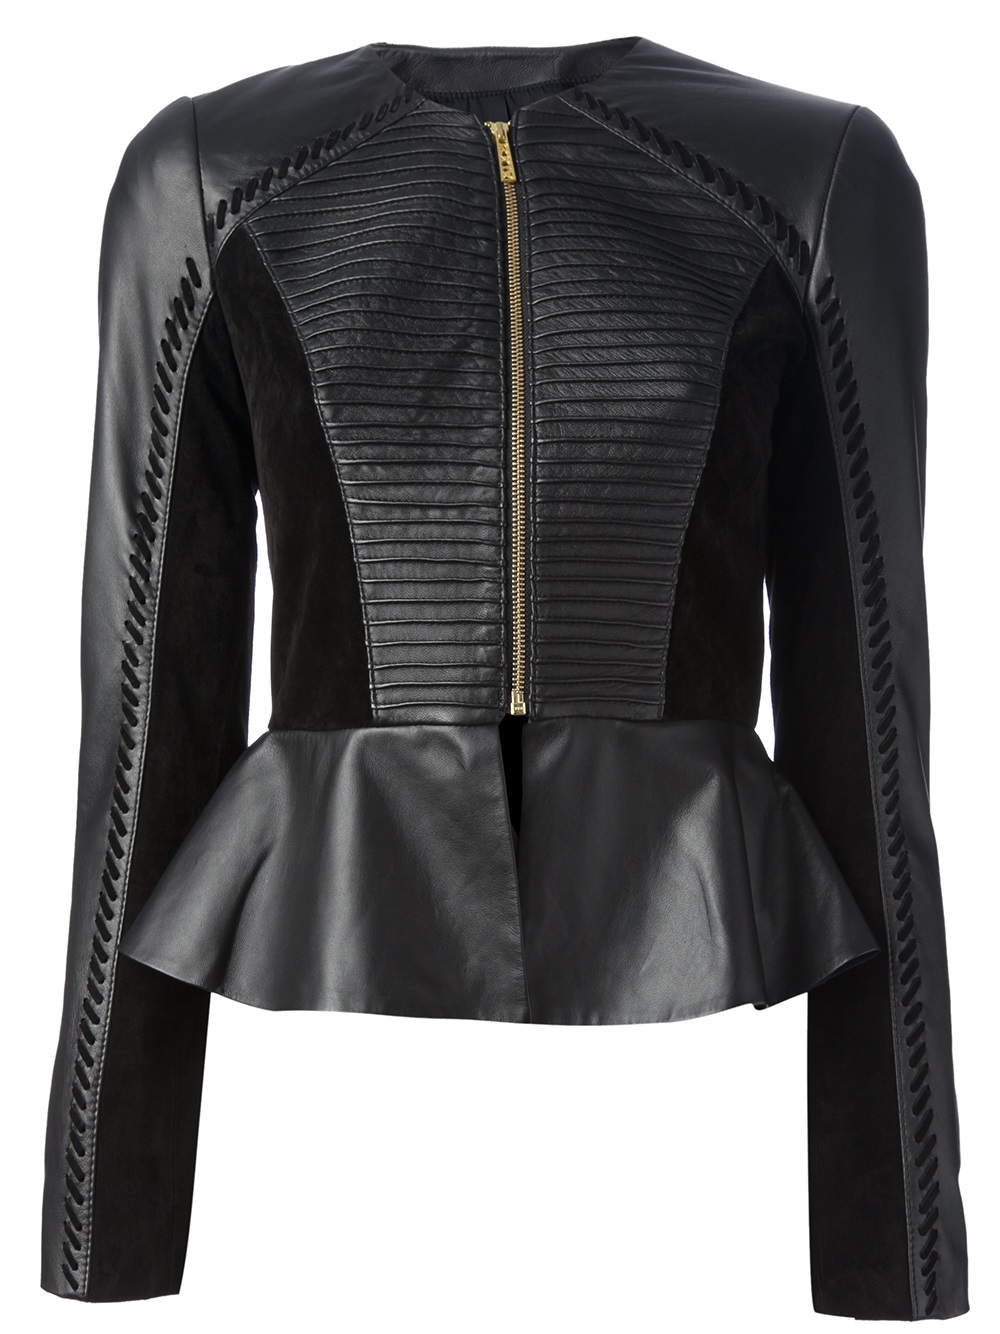 Lyst - Alice by temperley Peplum Leather Jacket in Black